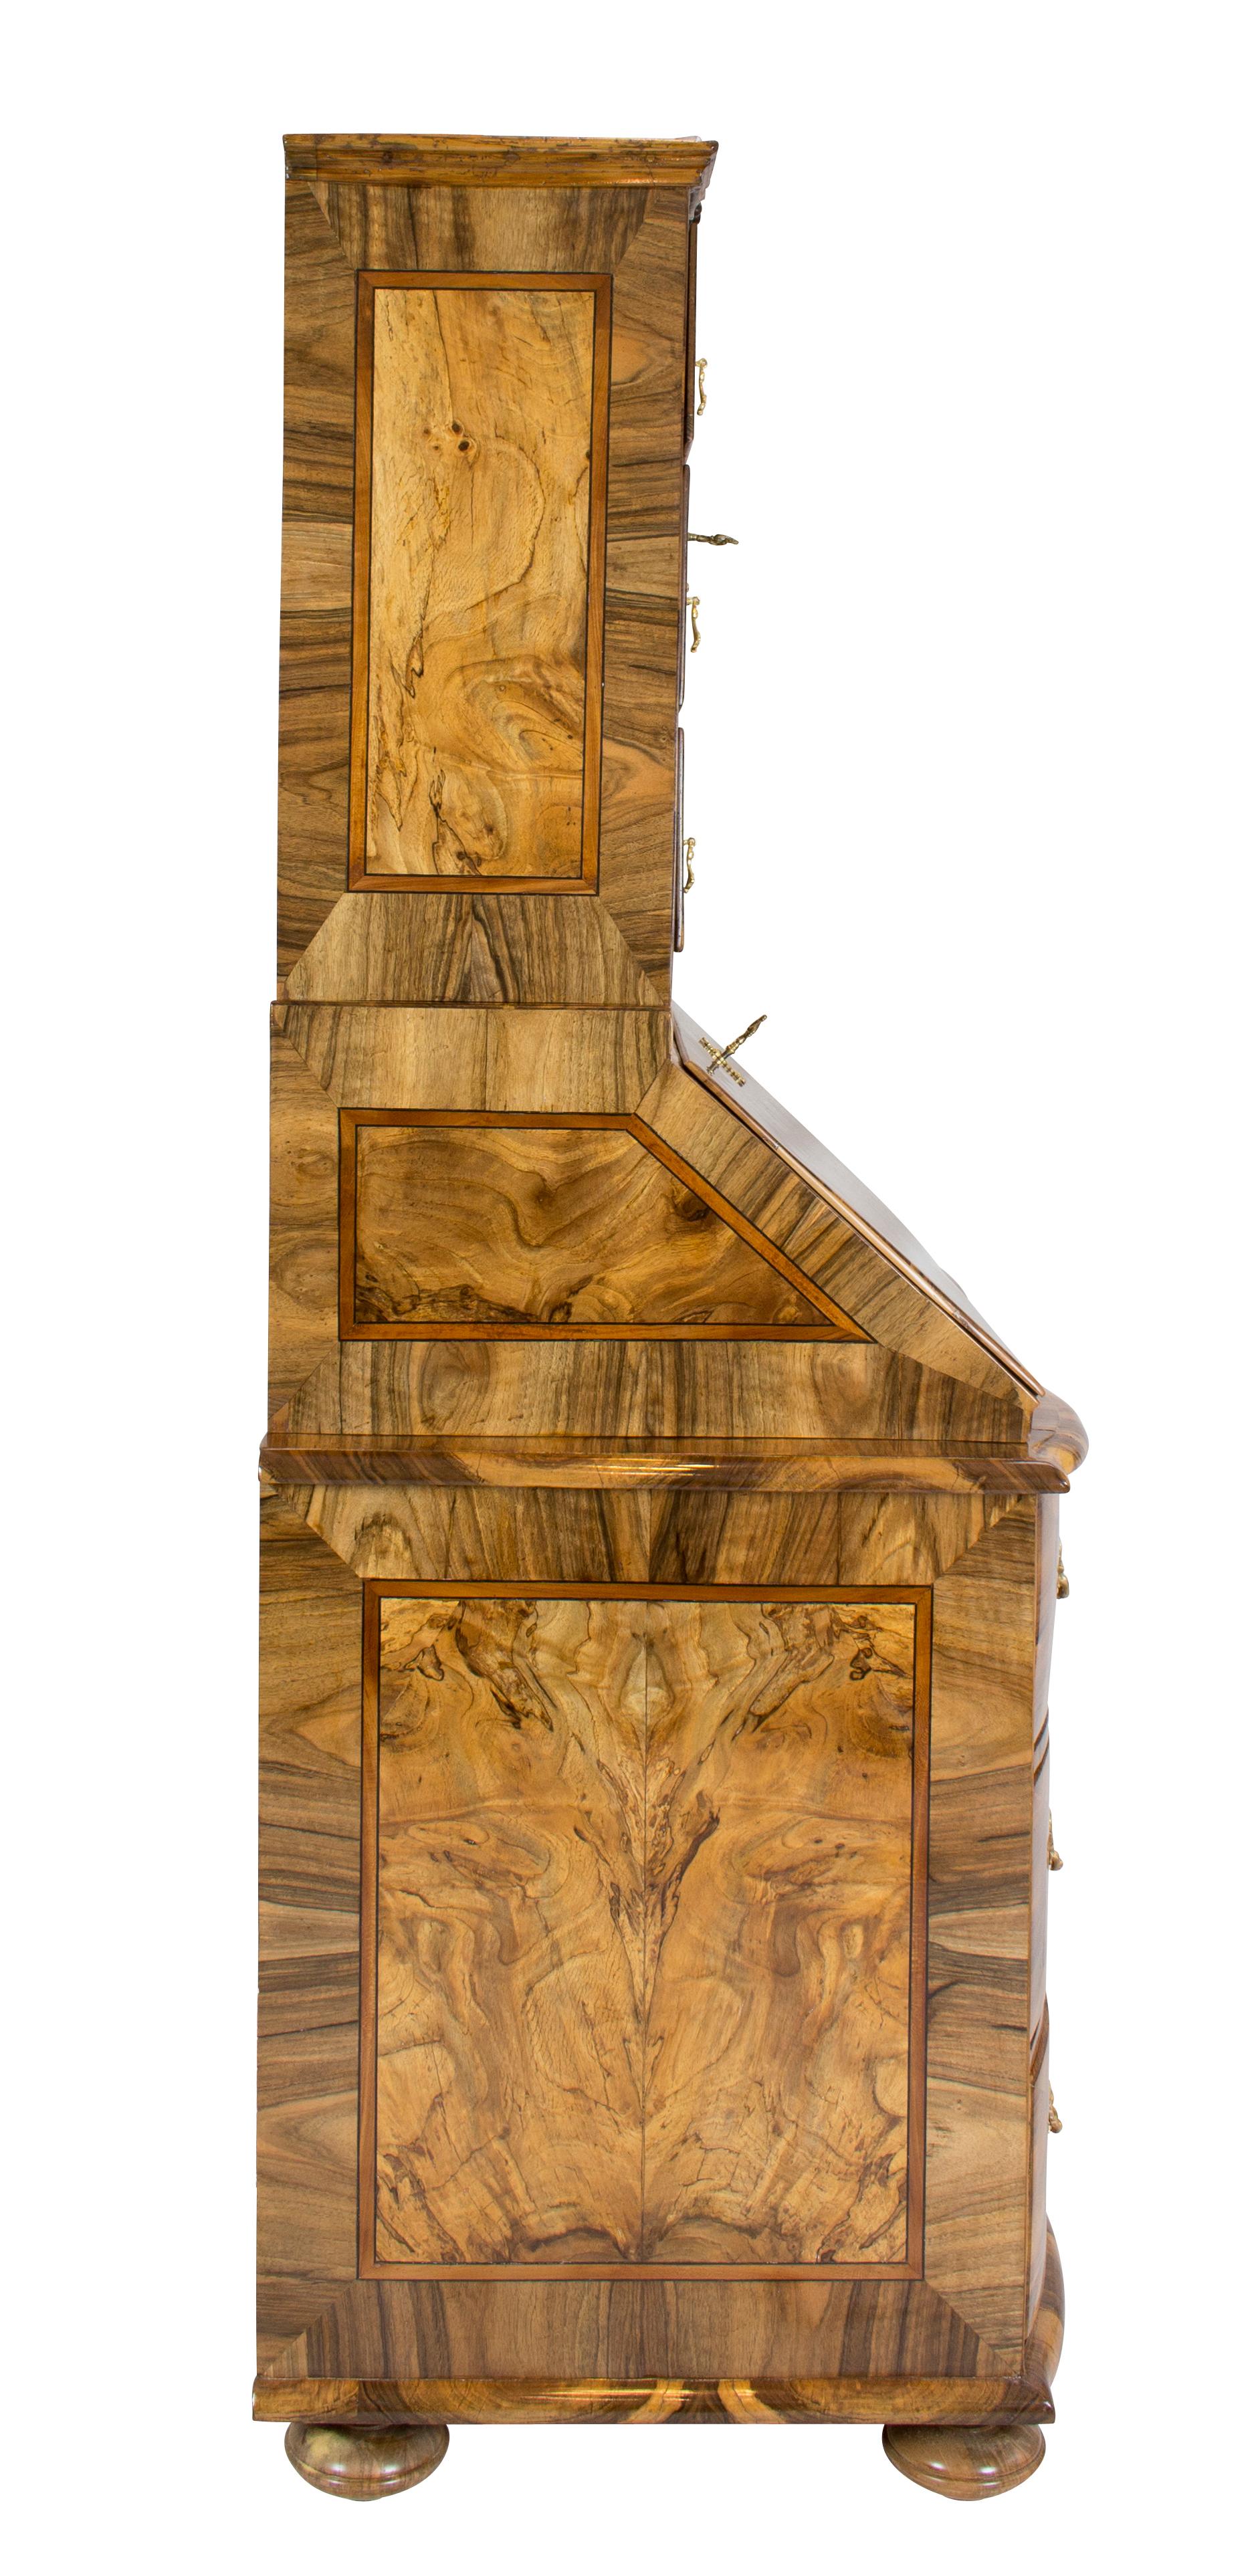 Austrian 18th Centurey Baroque Walnut Tabernacle / Secretaire For Sale